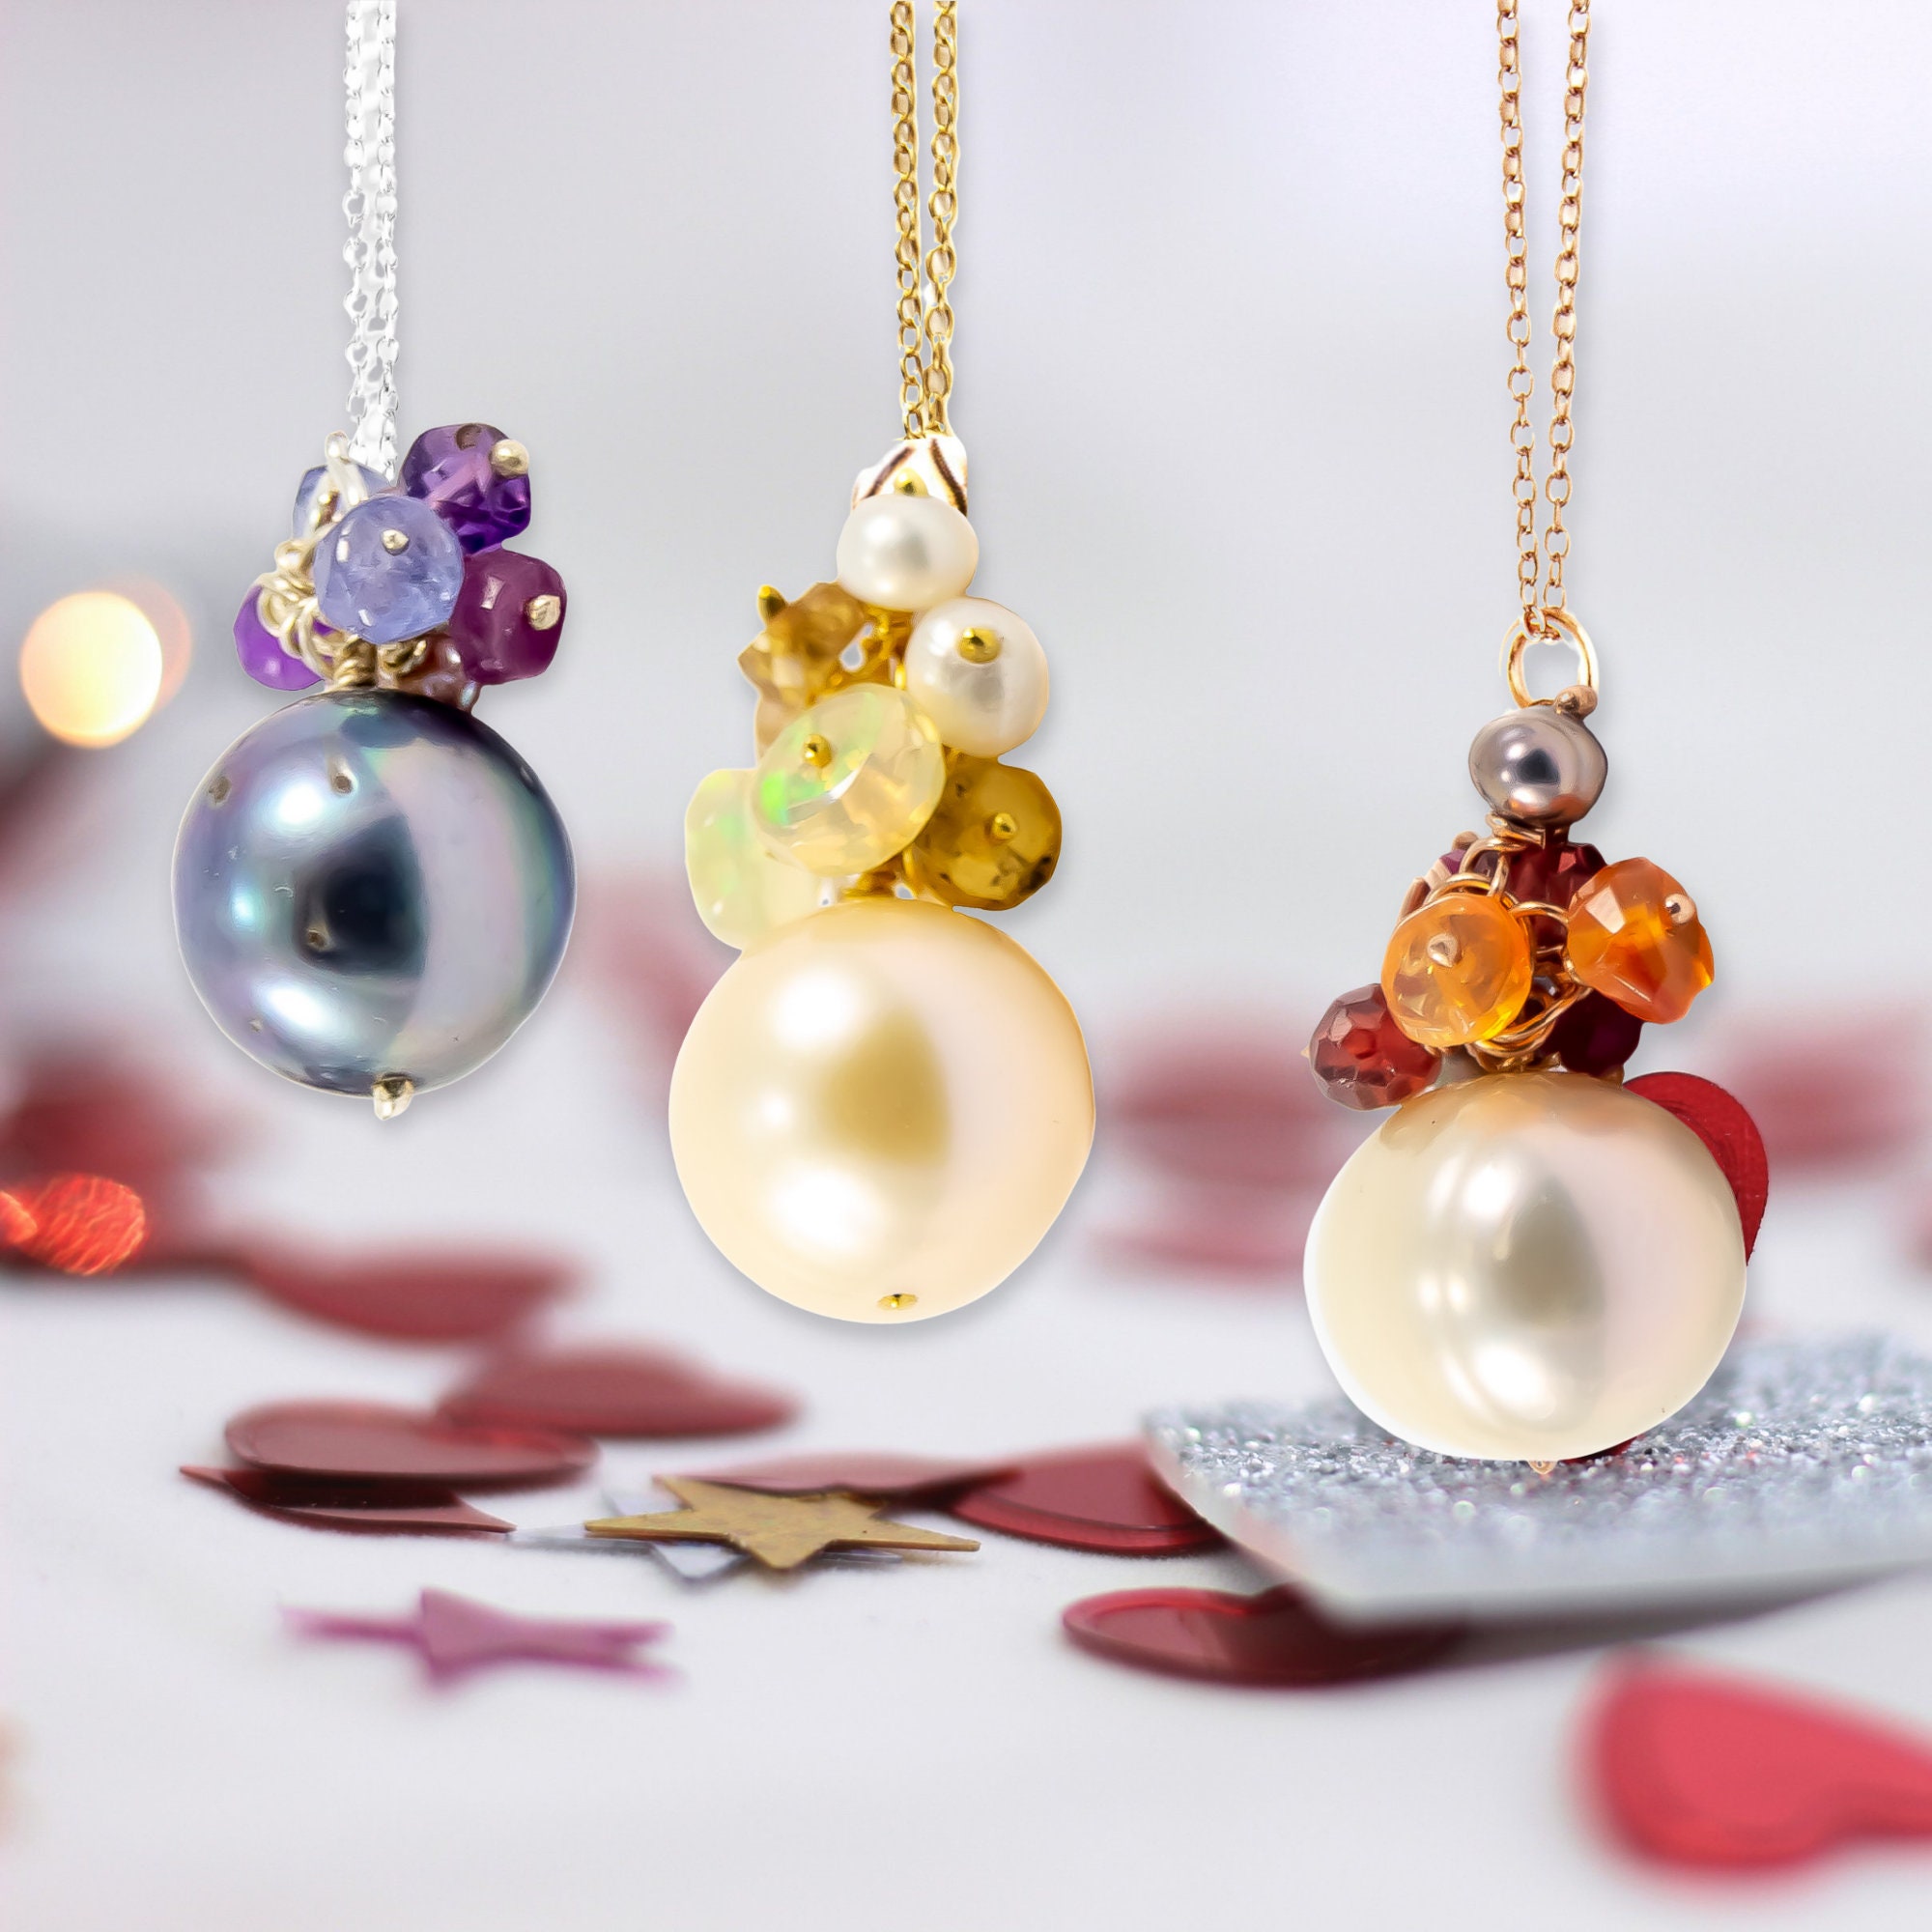 Children's Pearl Necklaces & Heirloom Jewelry  Little Girls Pearls –  Little Girl's Pearls